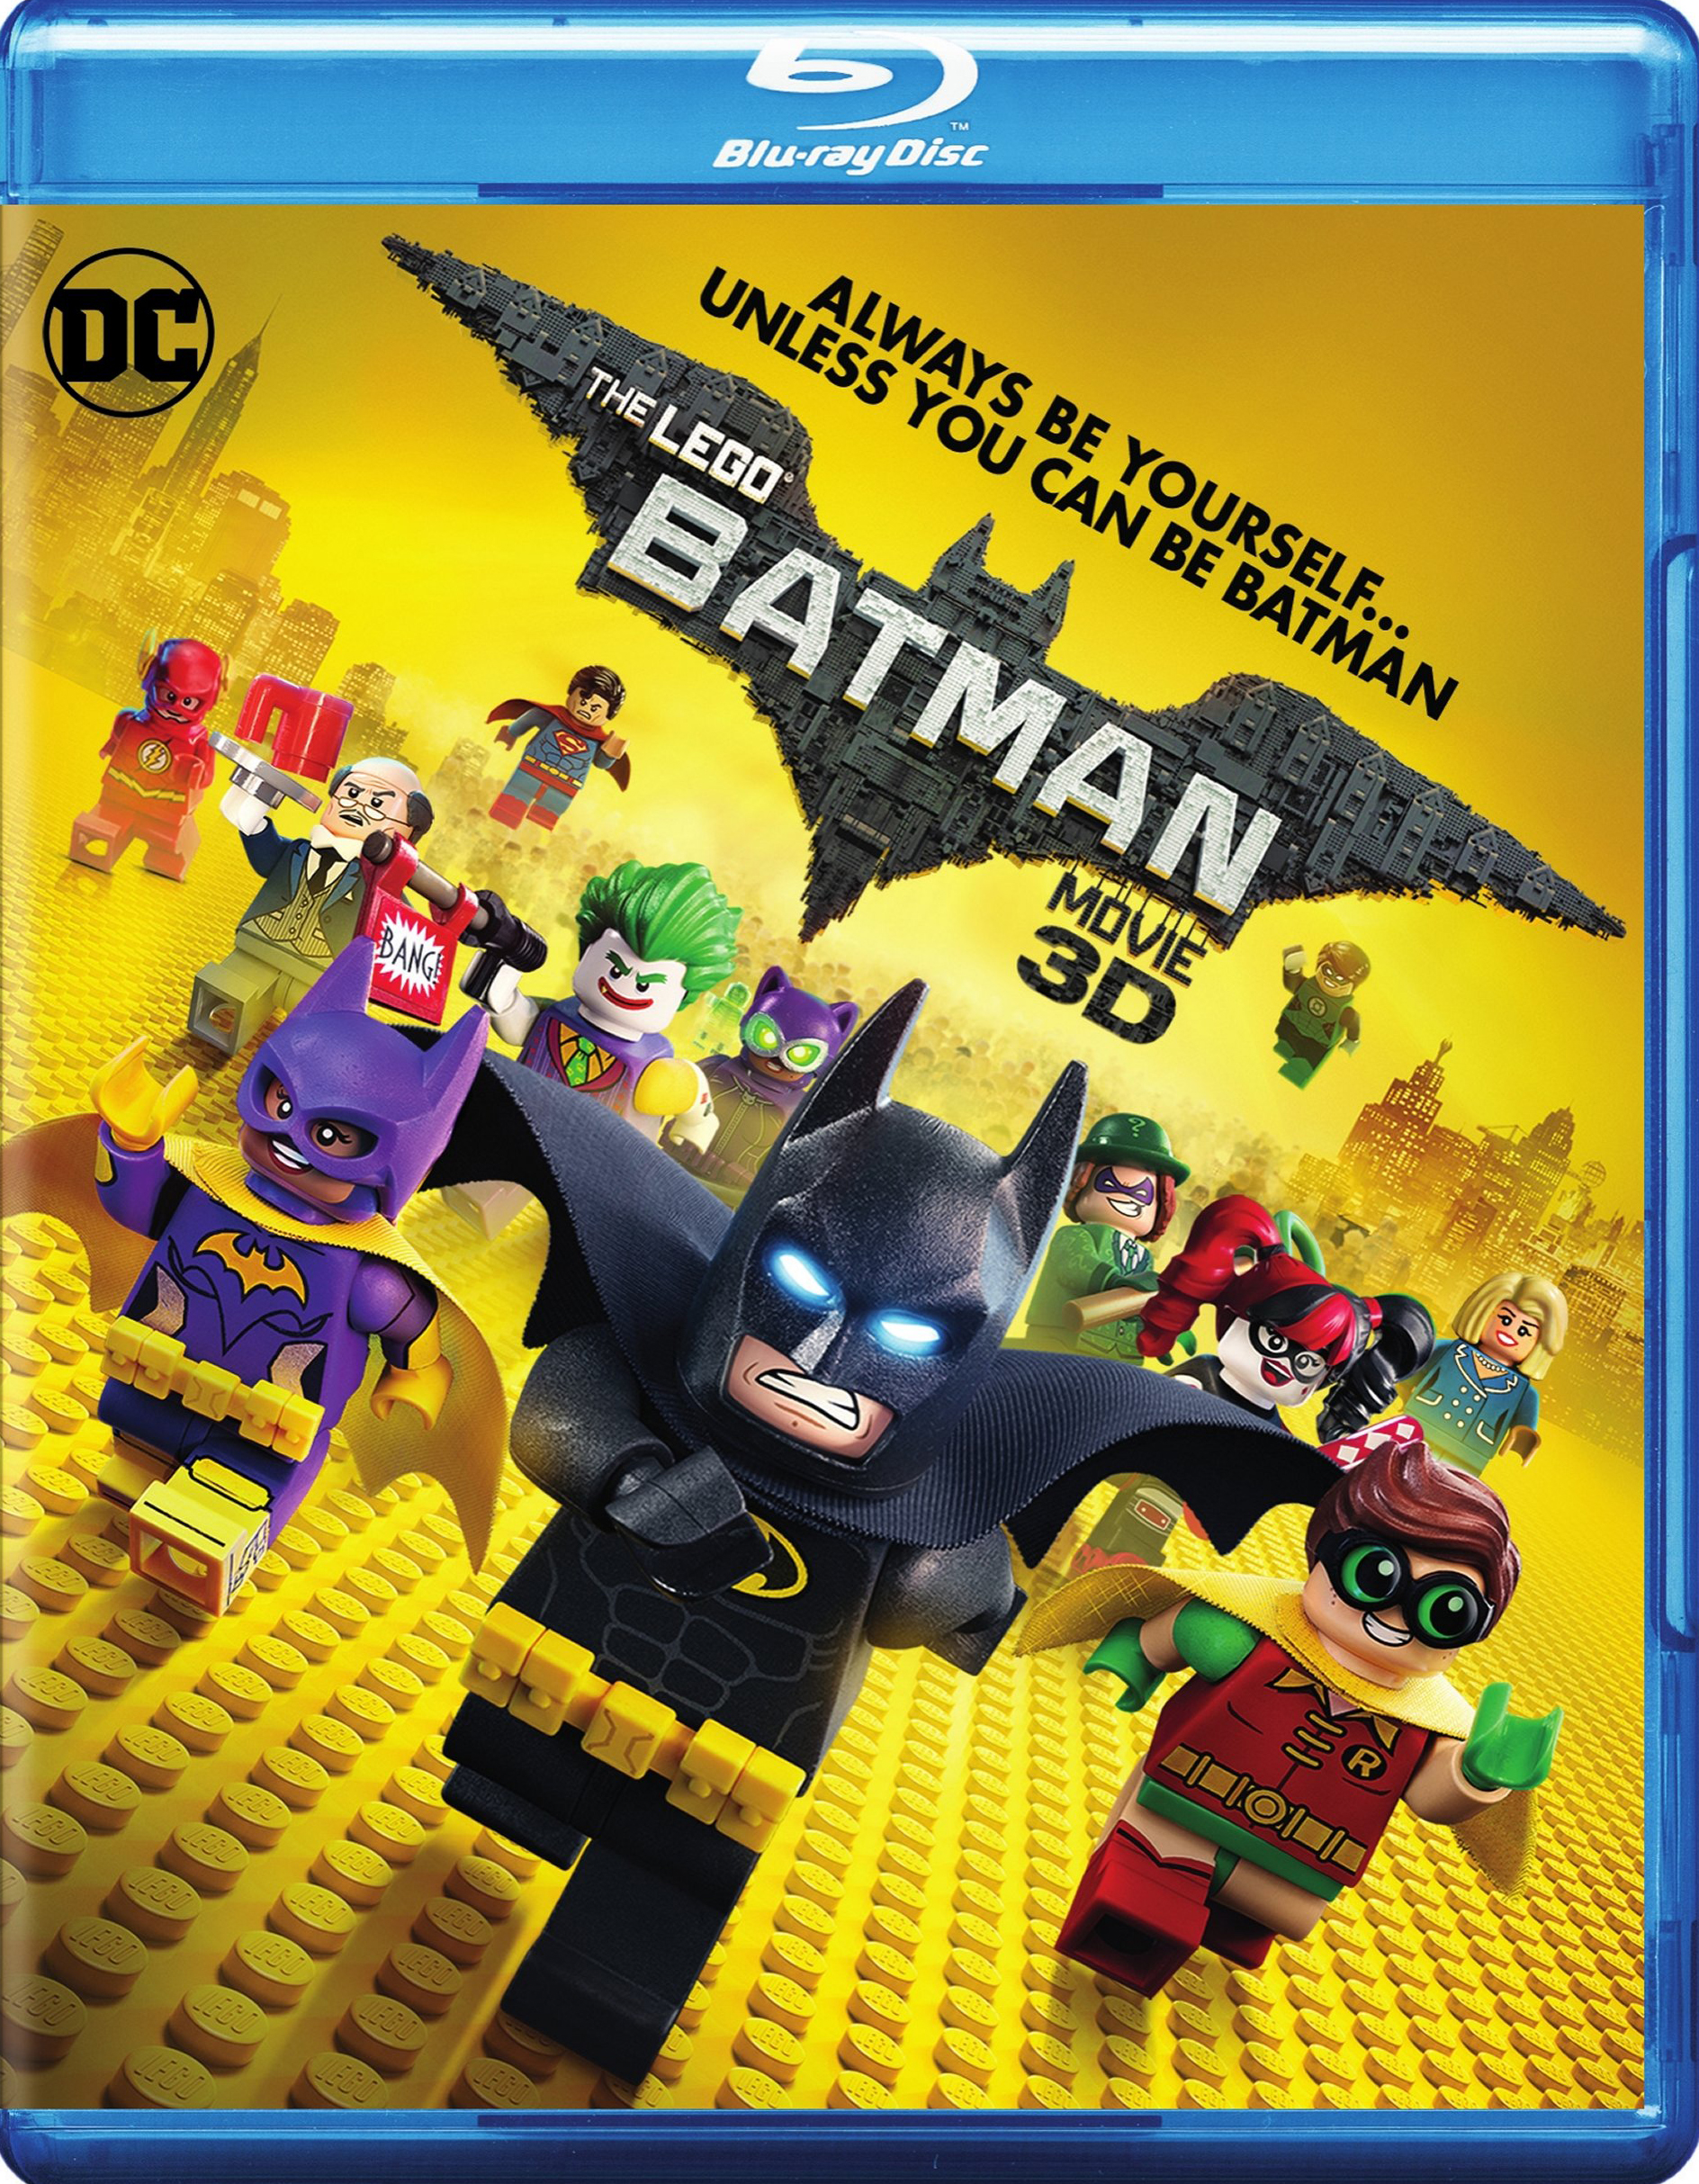 The LEGO Batman Movie The Batmobile 70905 6175860 - Best Buy